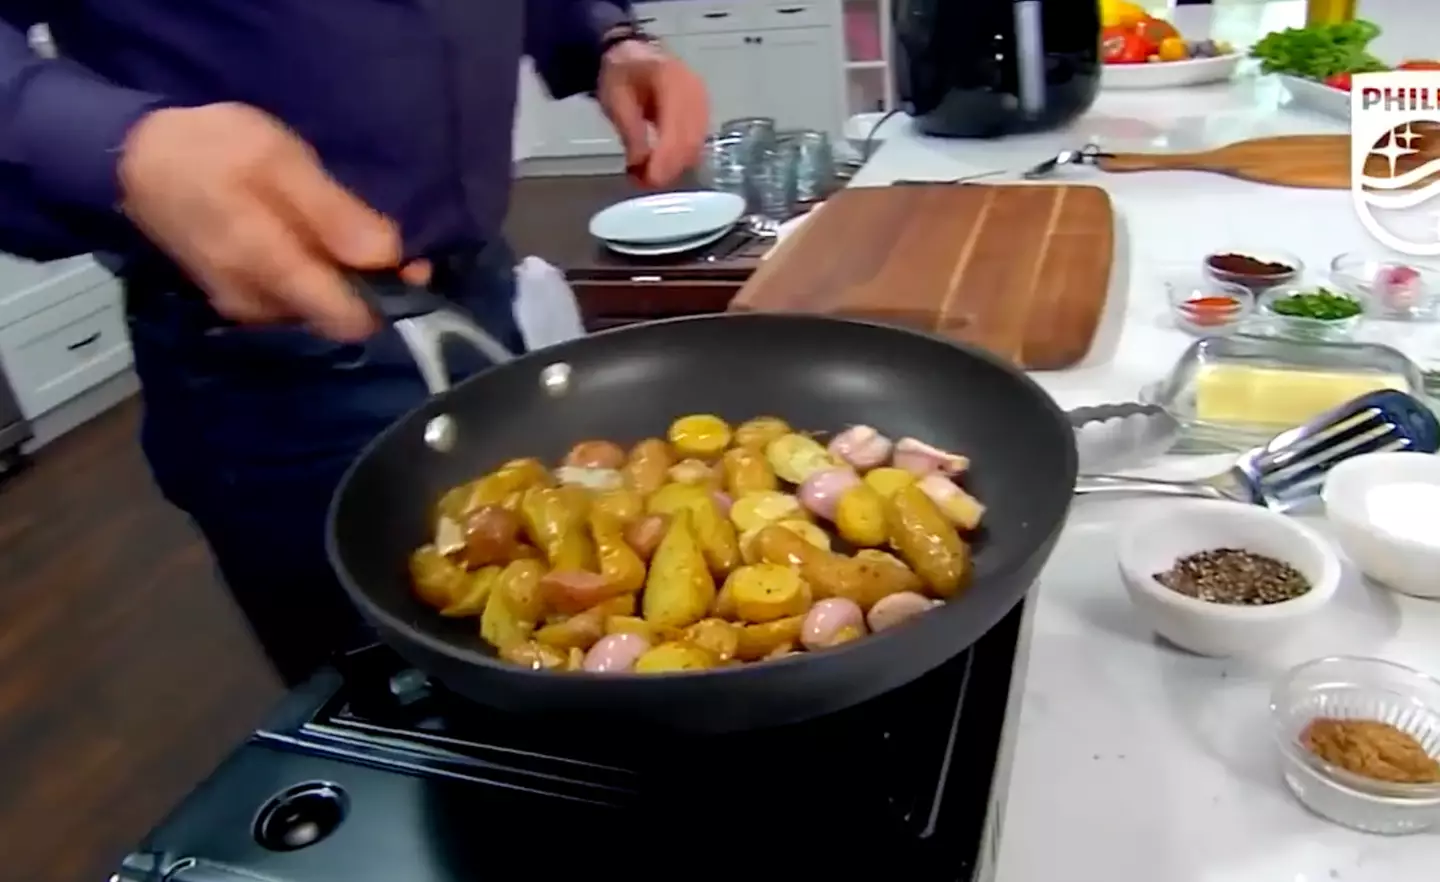 Gordon also cooks up some potatoes to accompany the steak. (Facebook/Master Chef Elite)